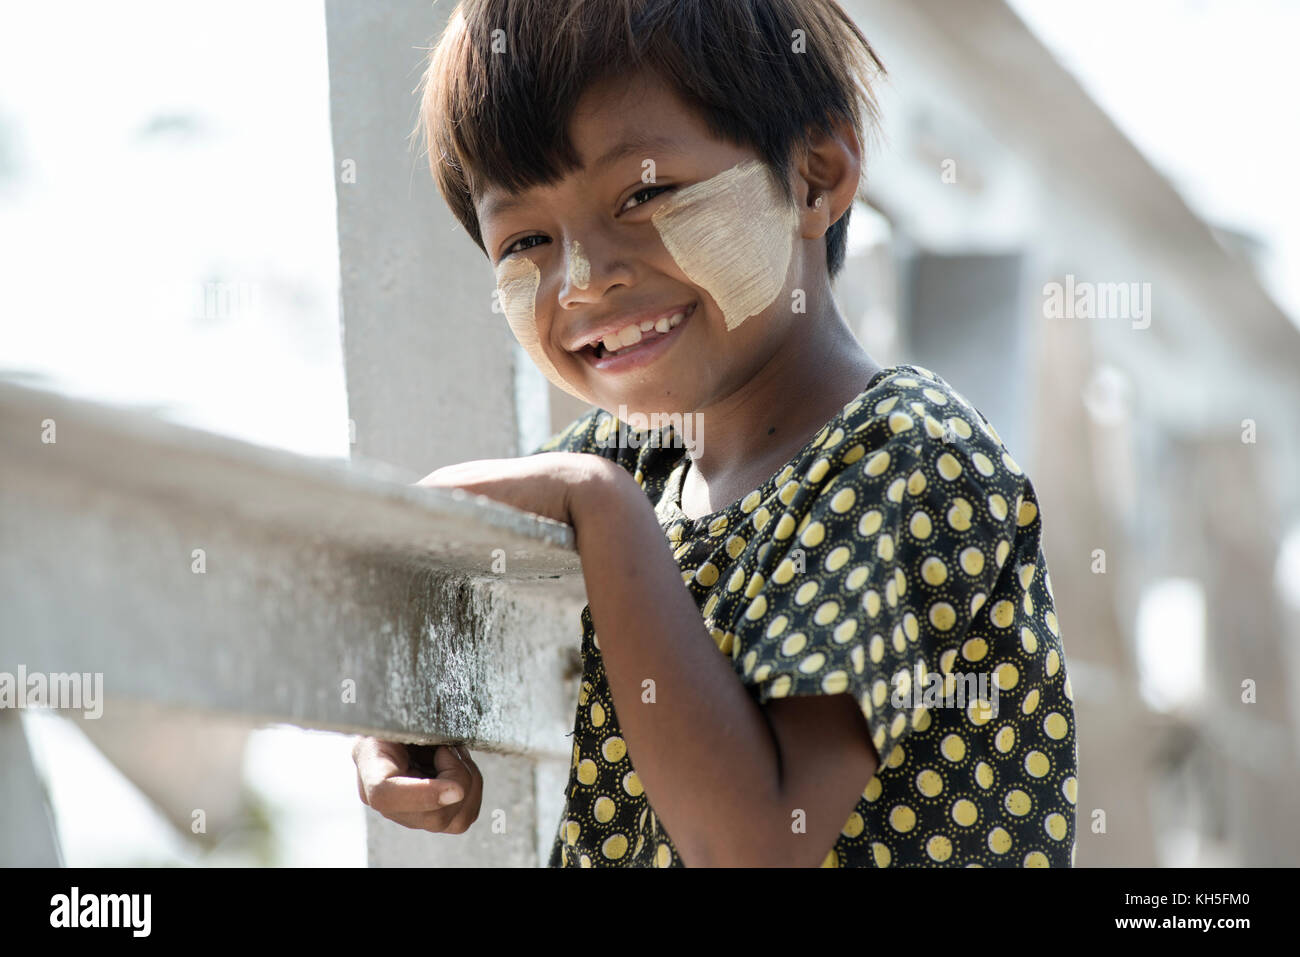 Smiling Birmese girl with traditional Tanaka face paint. February 22, 2014 - Yangon, Myanmar Stock Photo